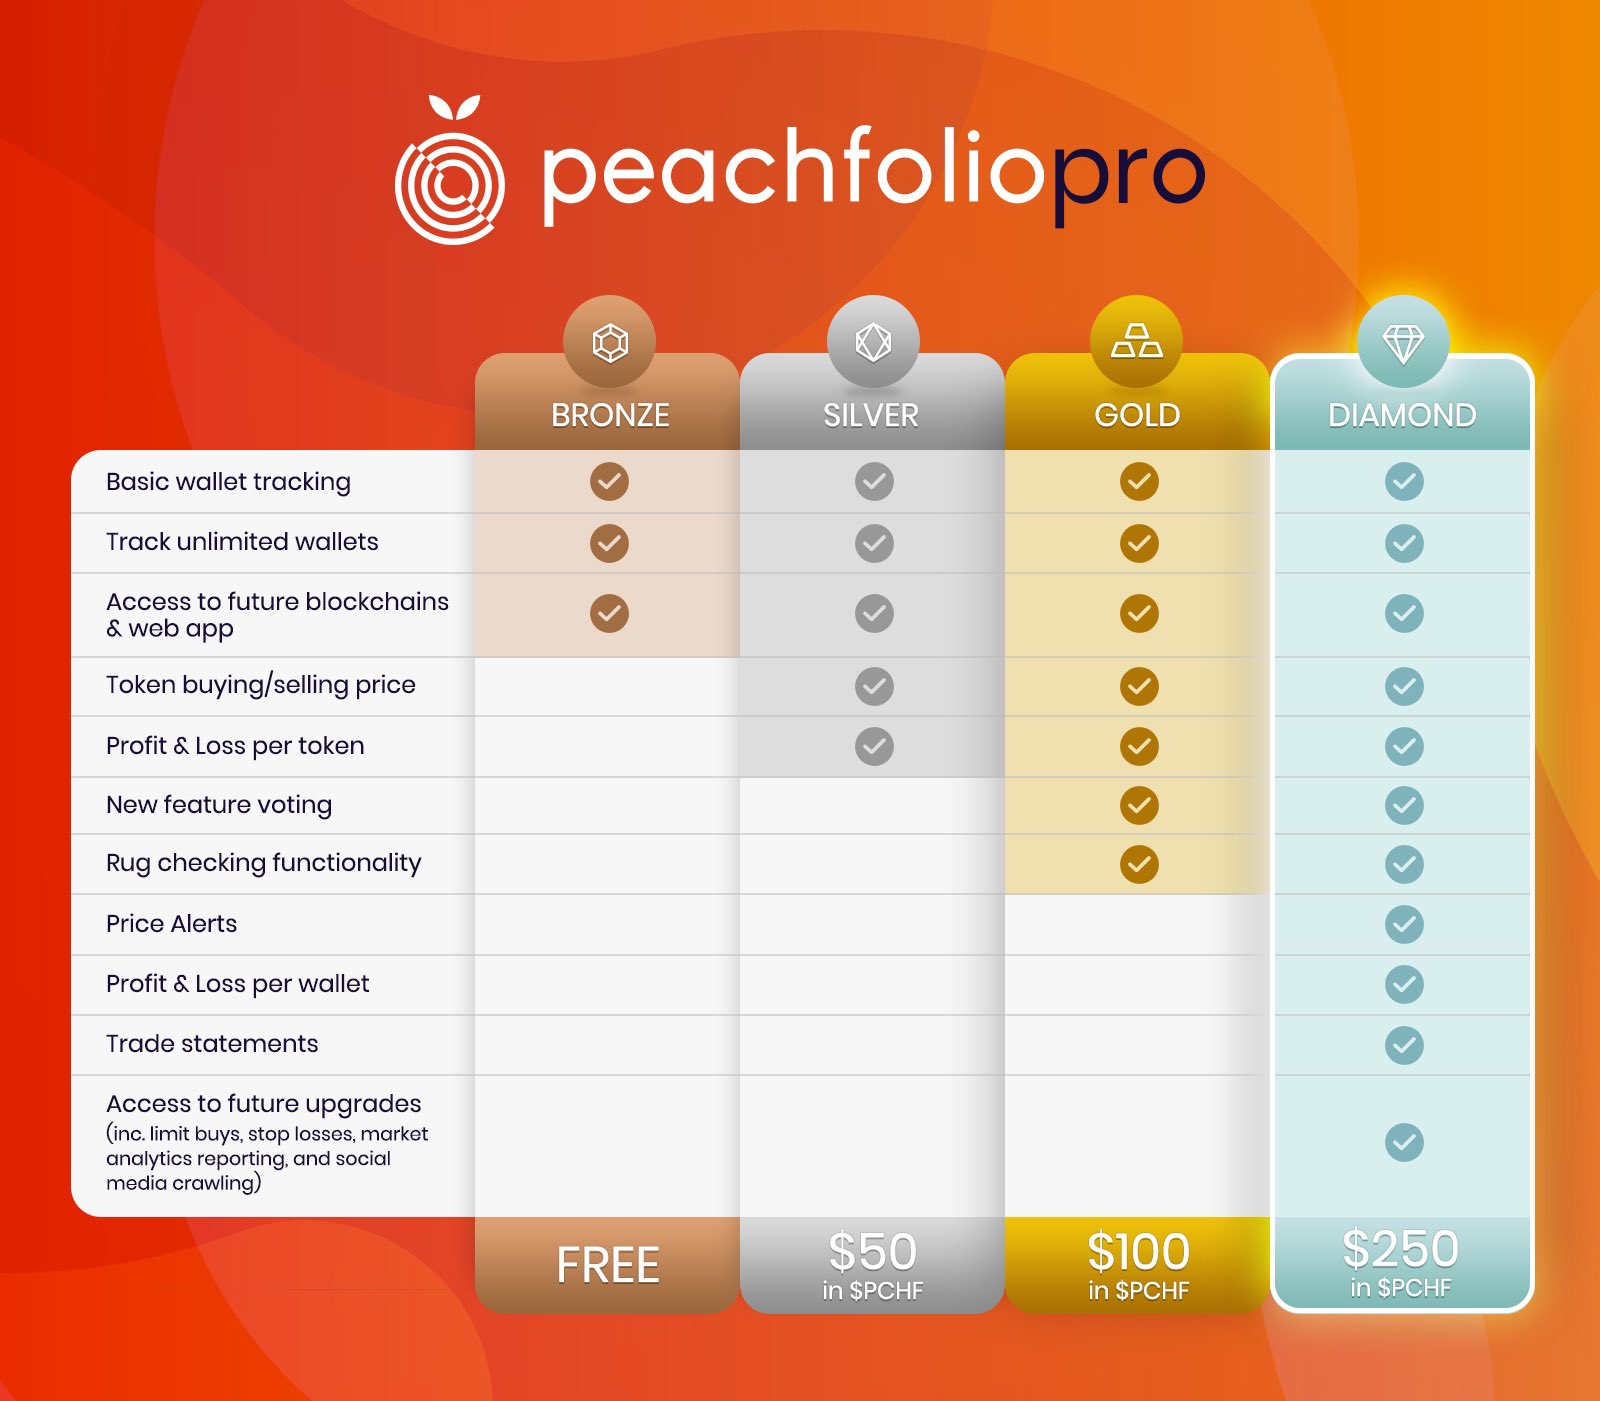 Peachfolio Pro tier levels and costs.